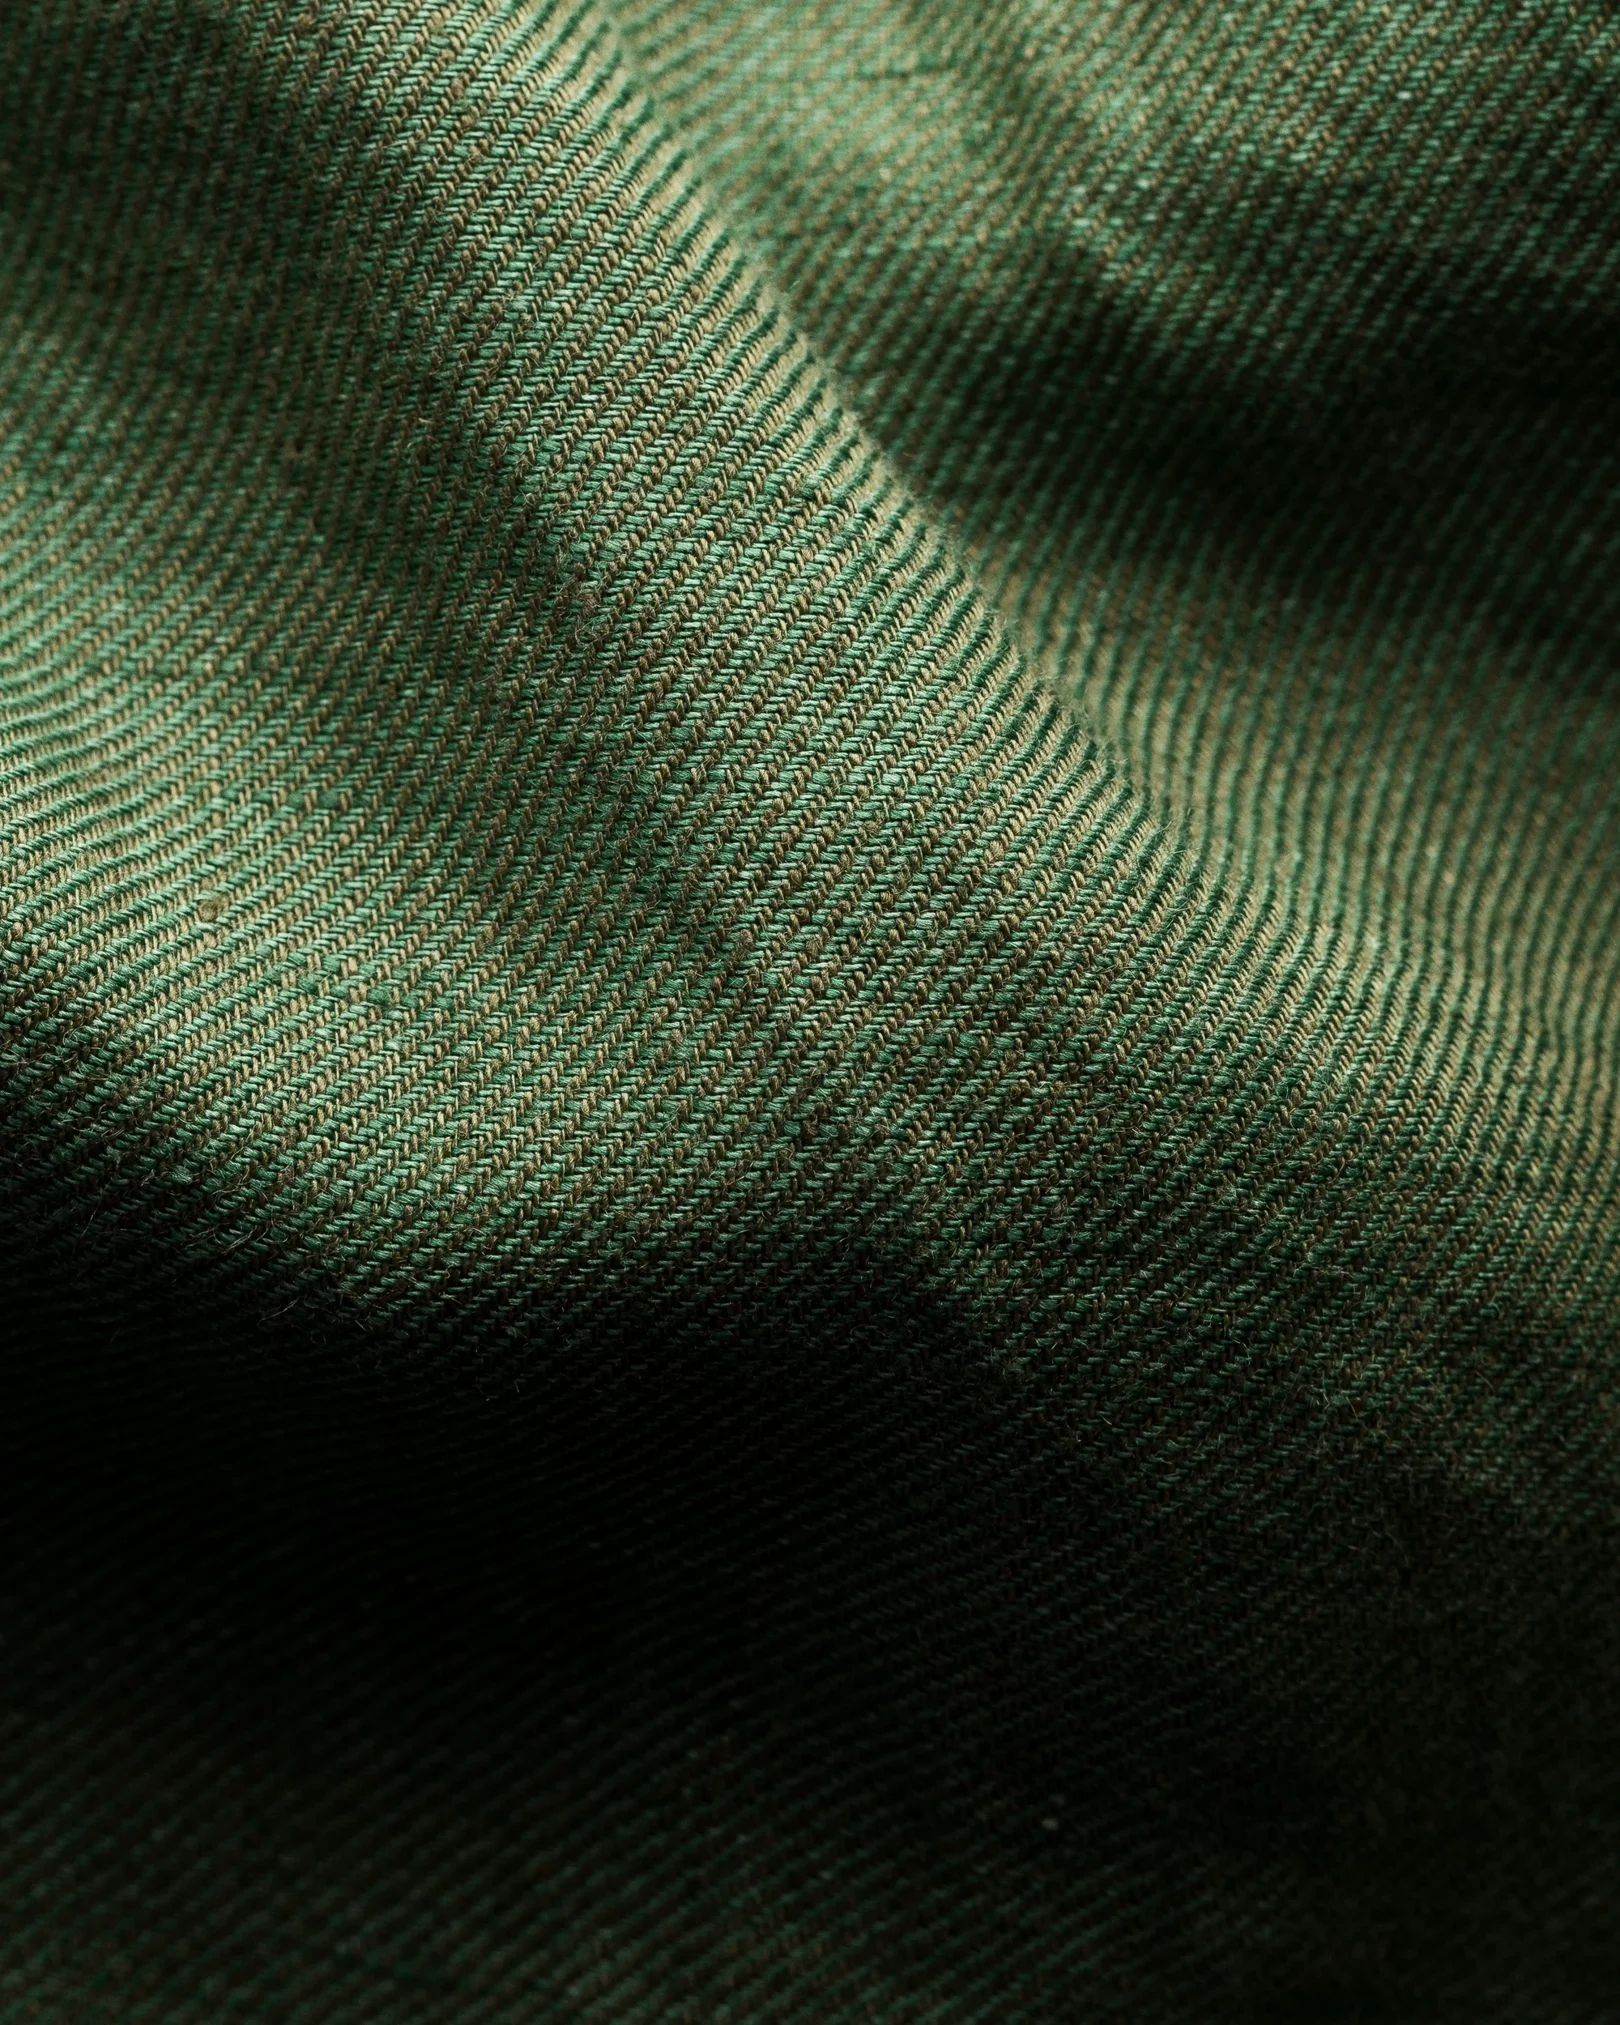 Eton - dark green linen